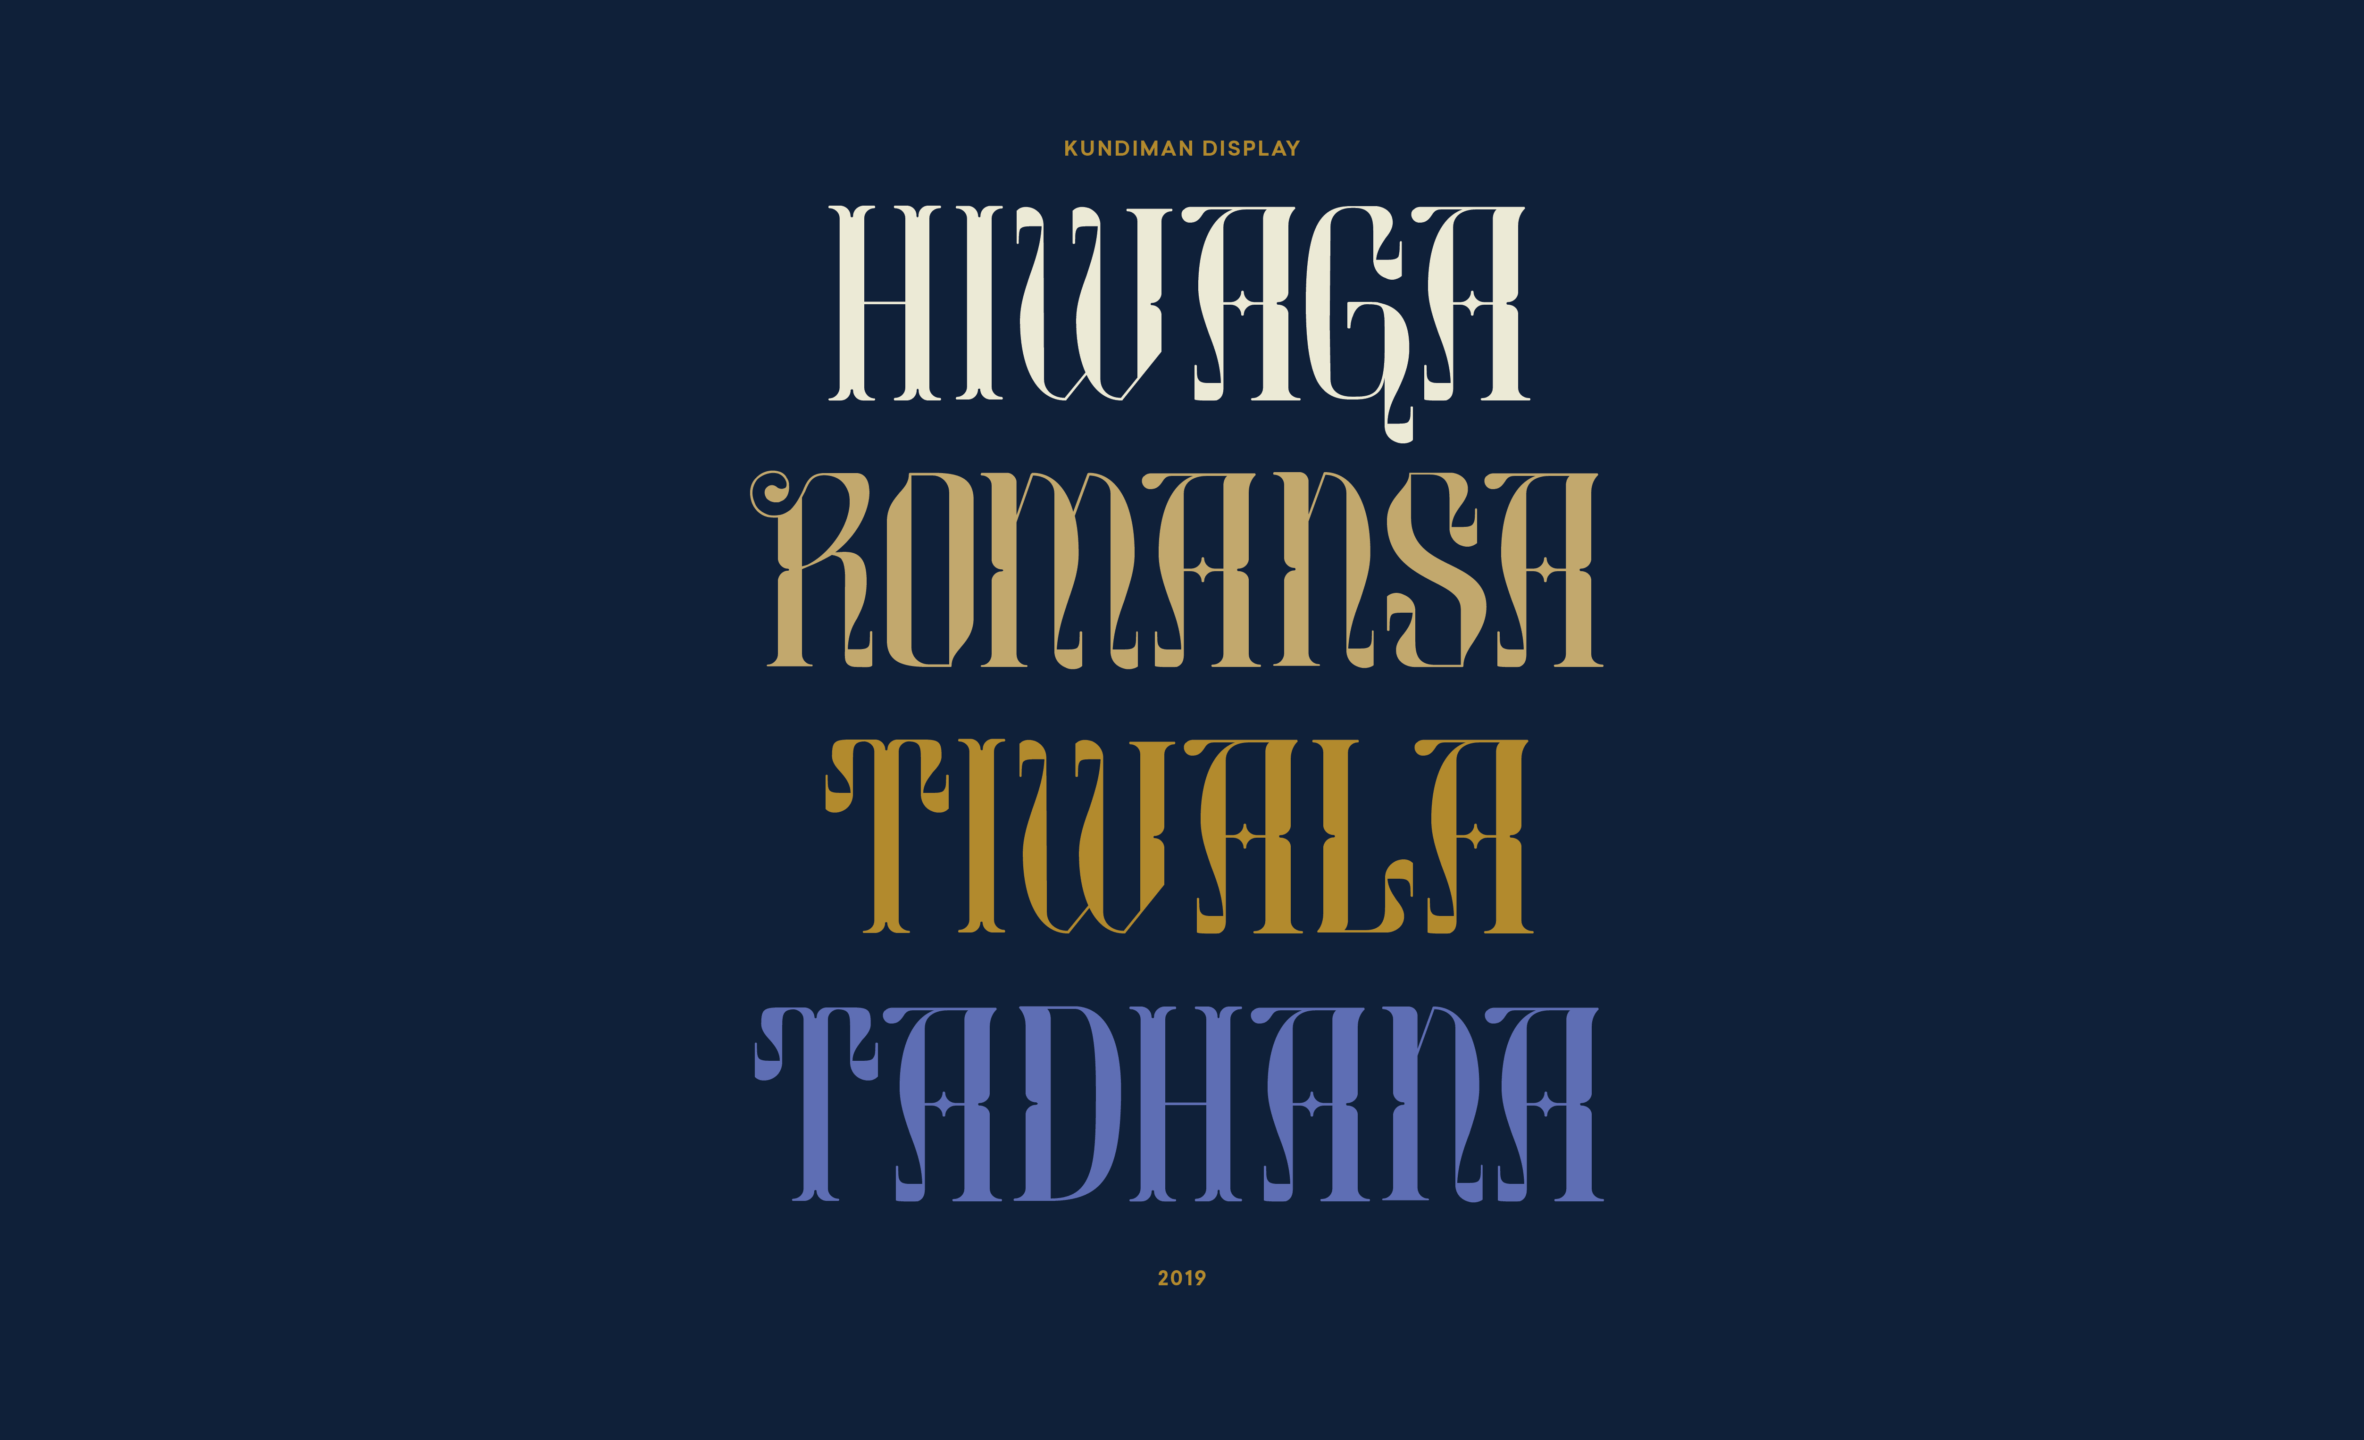 Minimal typography application of the custom Filipino typeface Kundiman